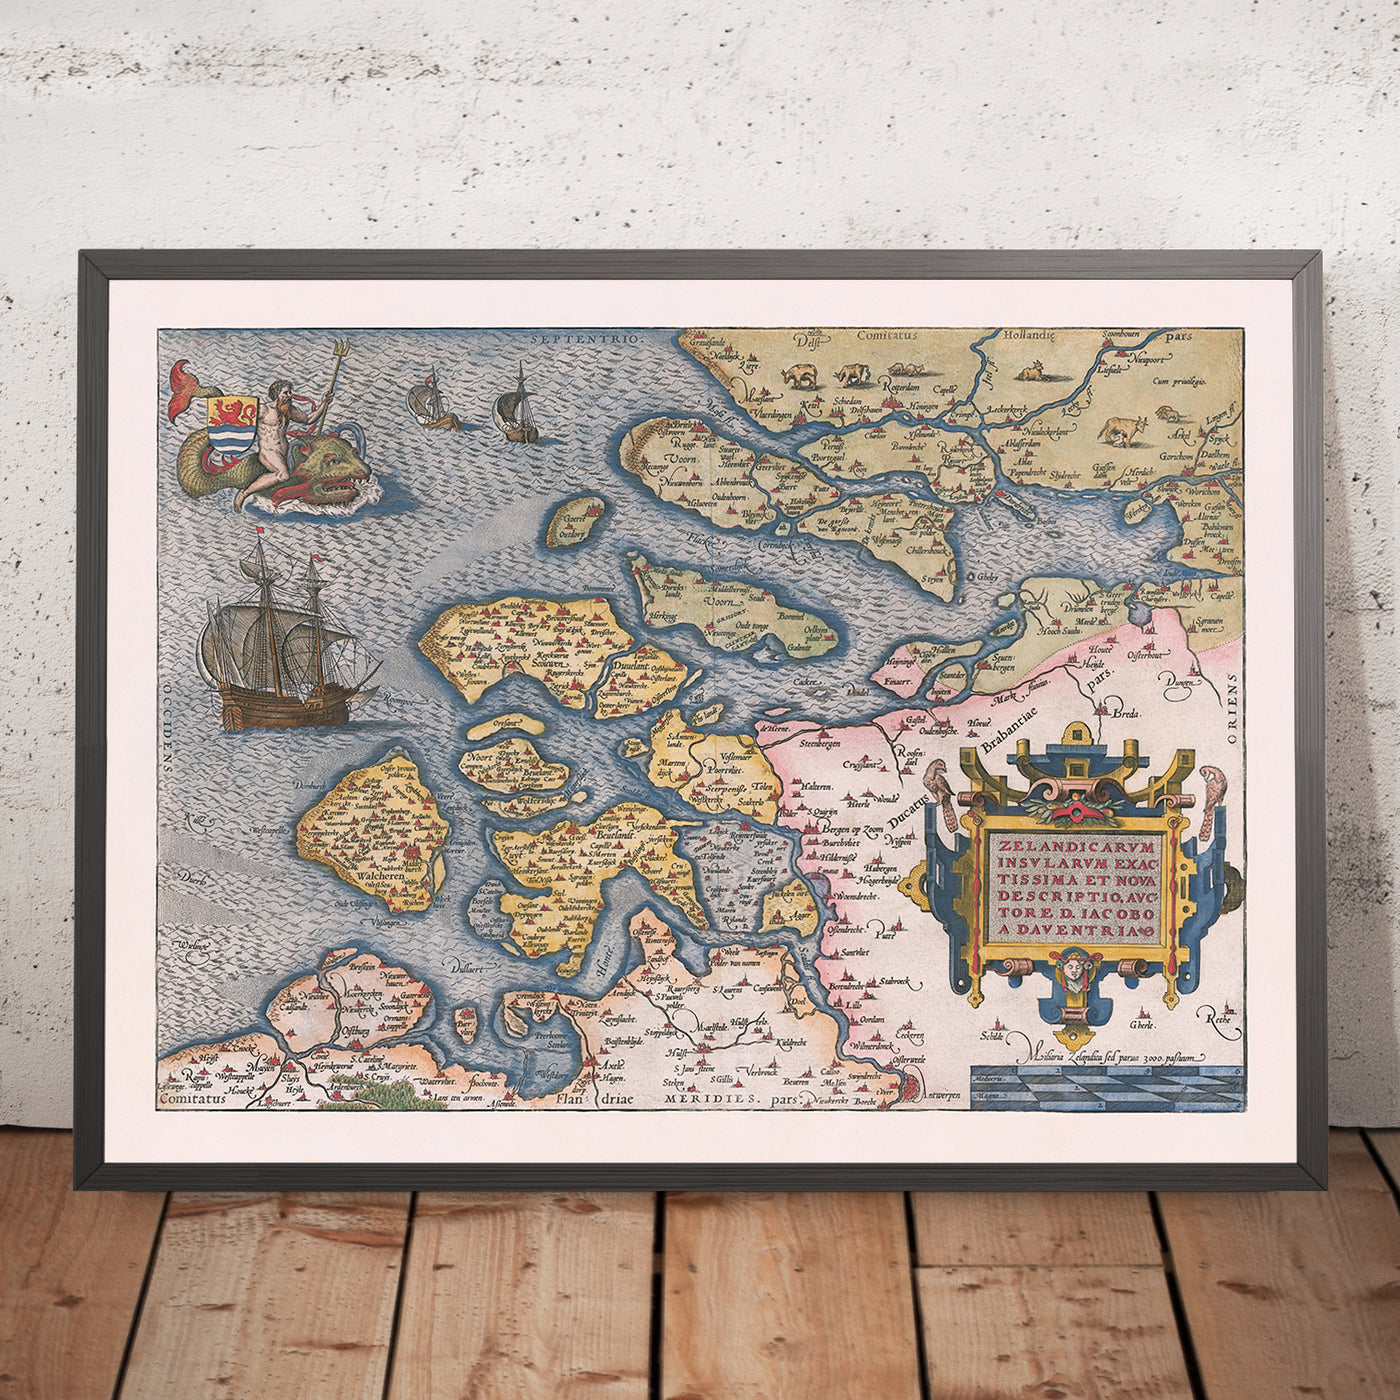 Mapa antiguo de Zelanda por Ortelius, 1584: Rotterdam, Amberes, Delft, Tritón, veleros